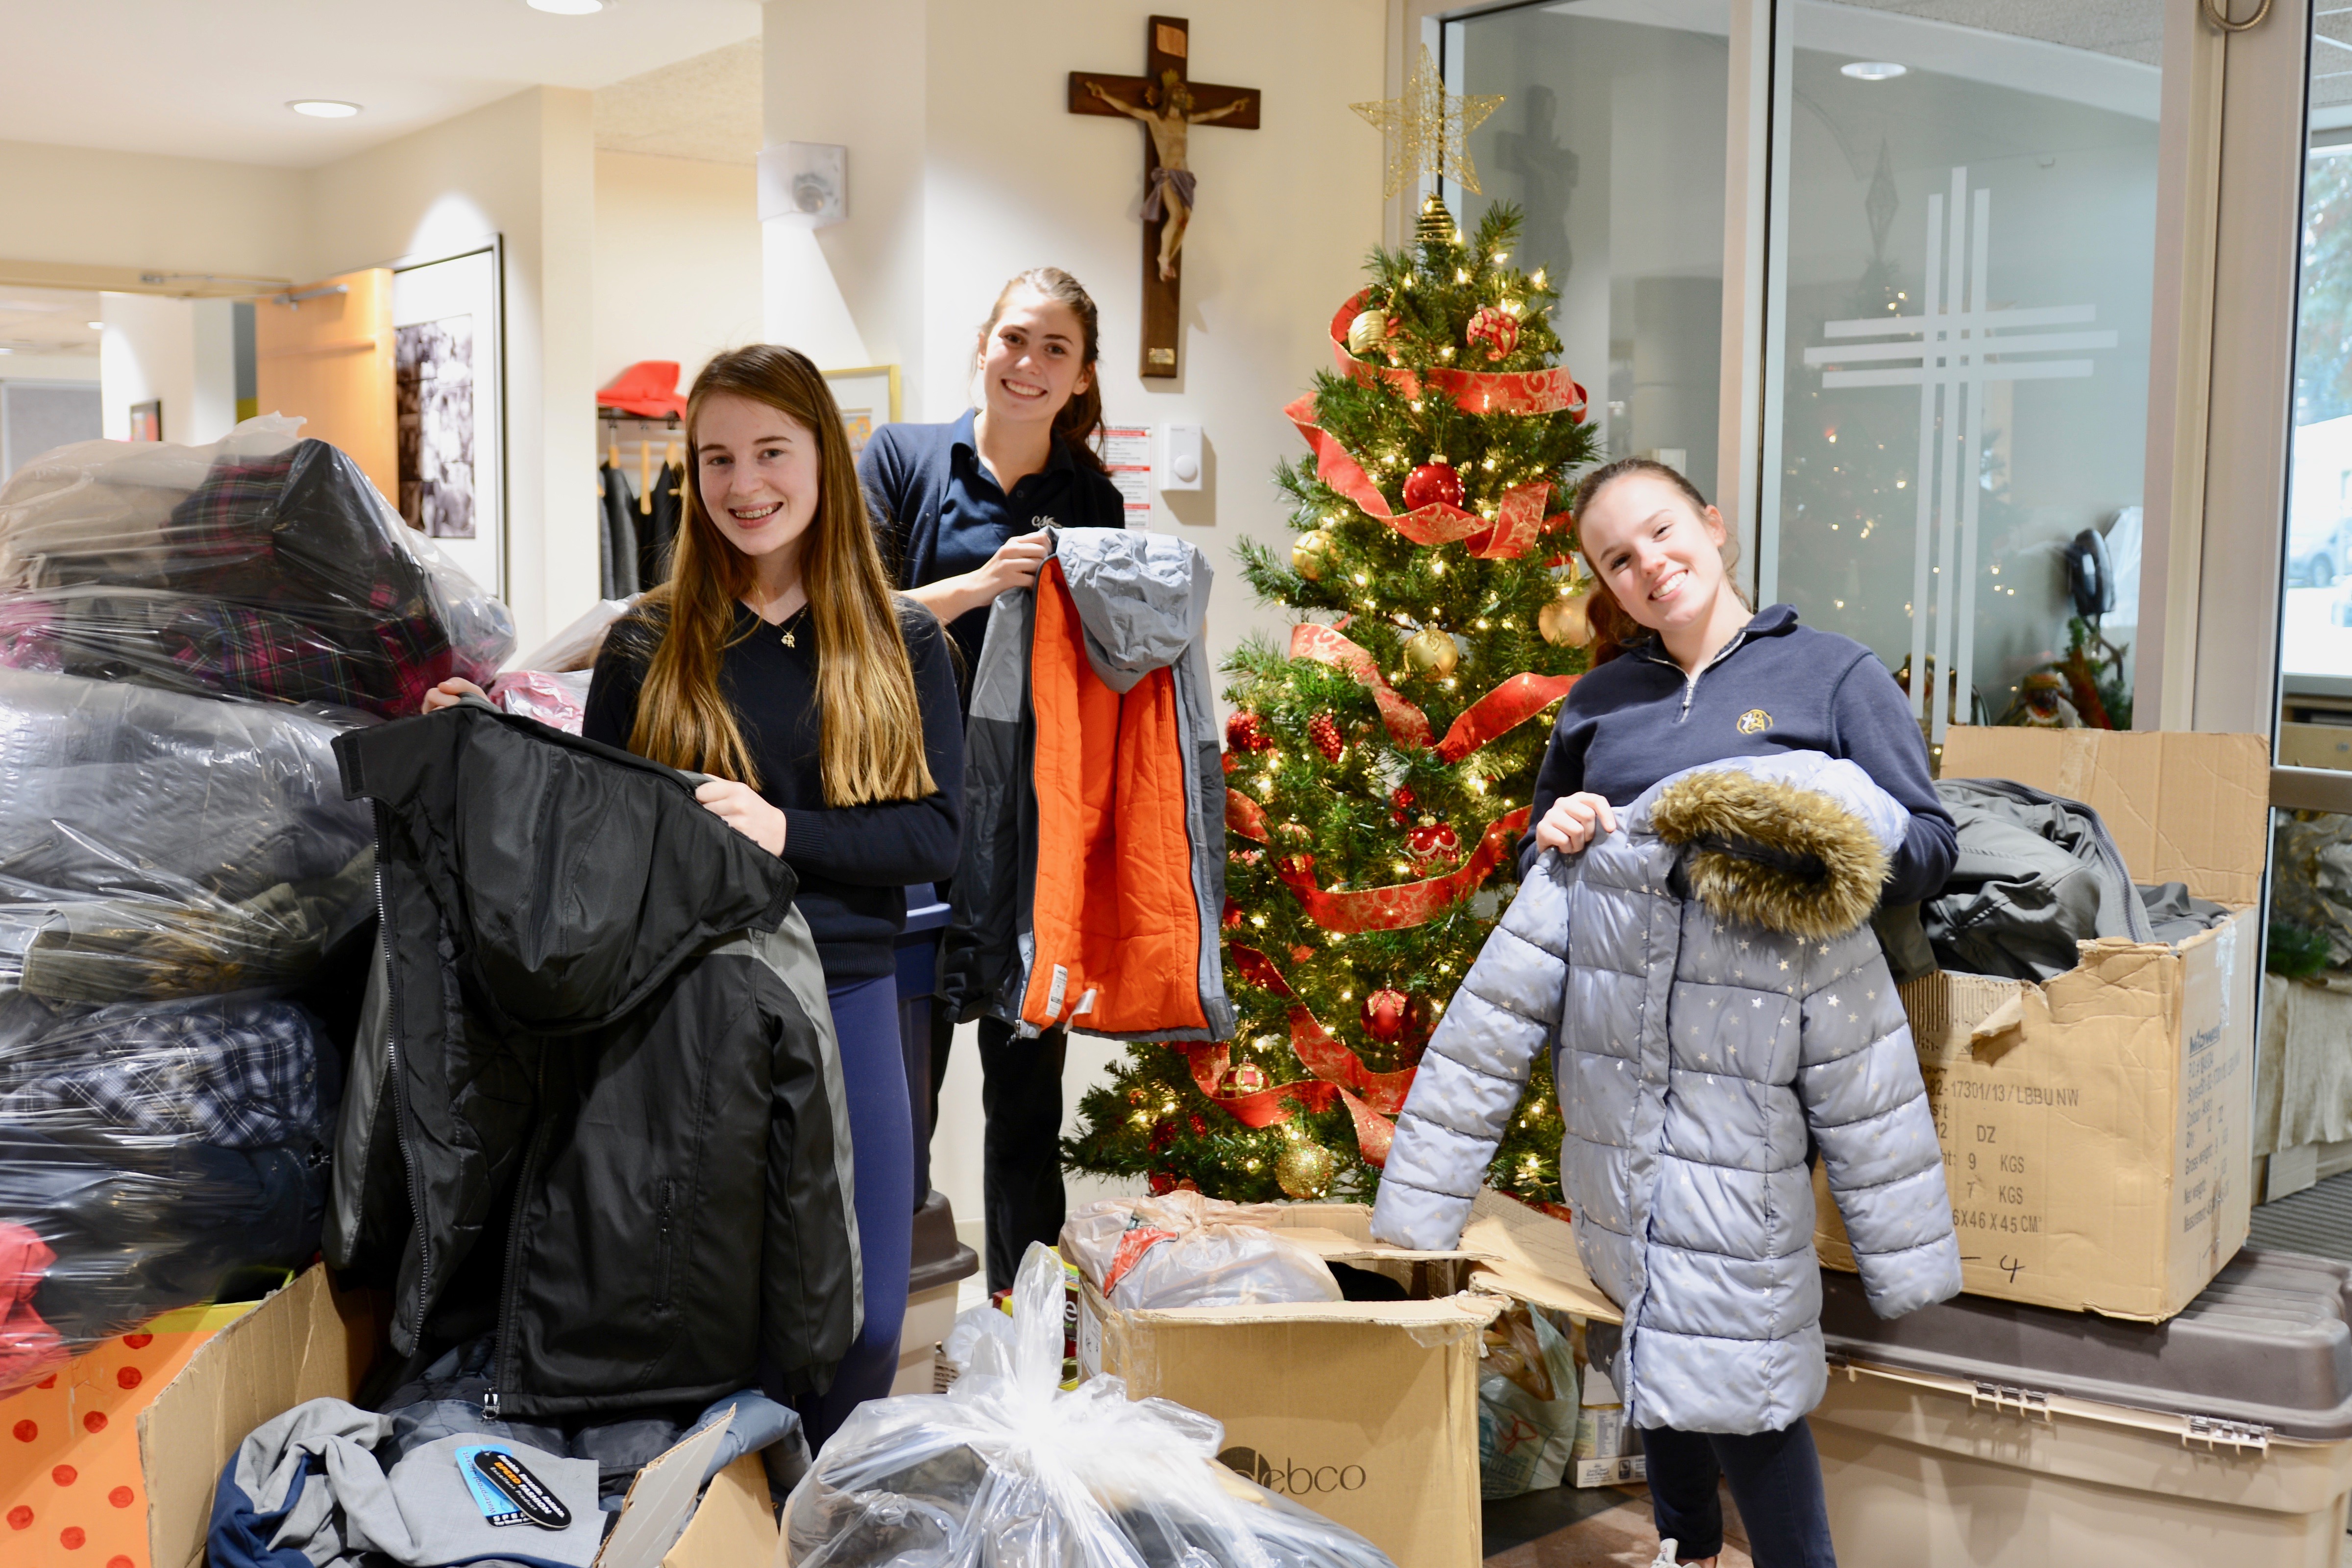 Student Senate at Sudbury Catholic Schools donates over 150 coats to those in need